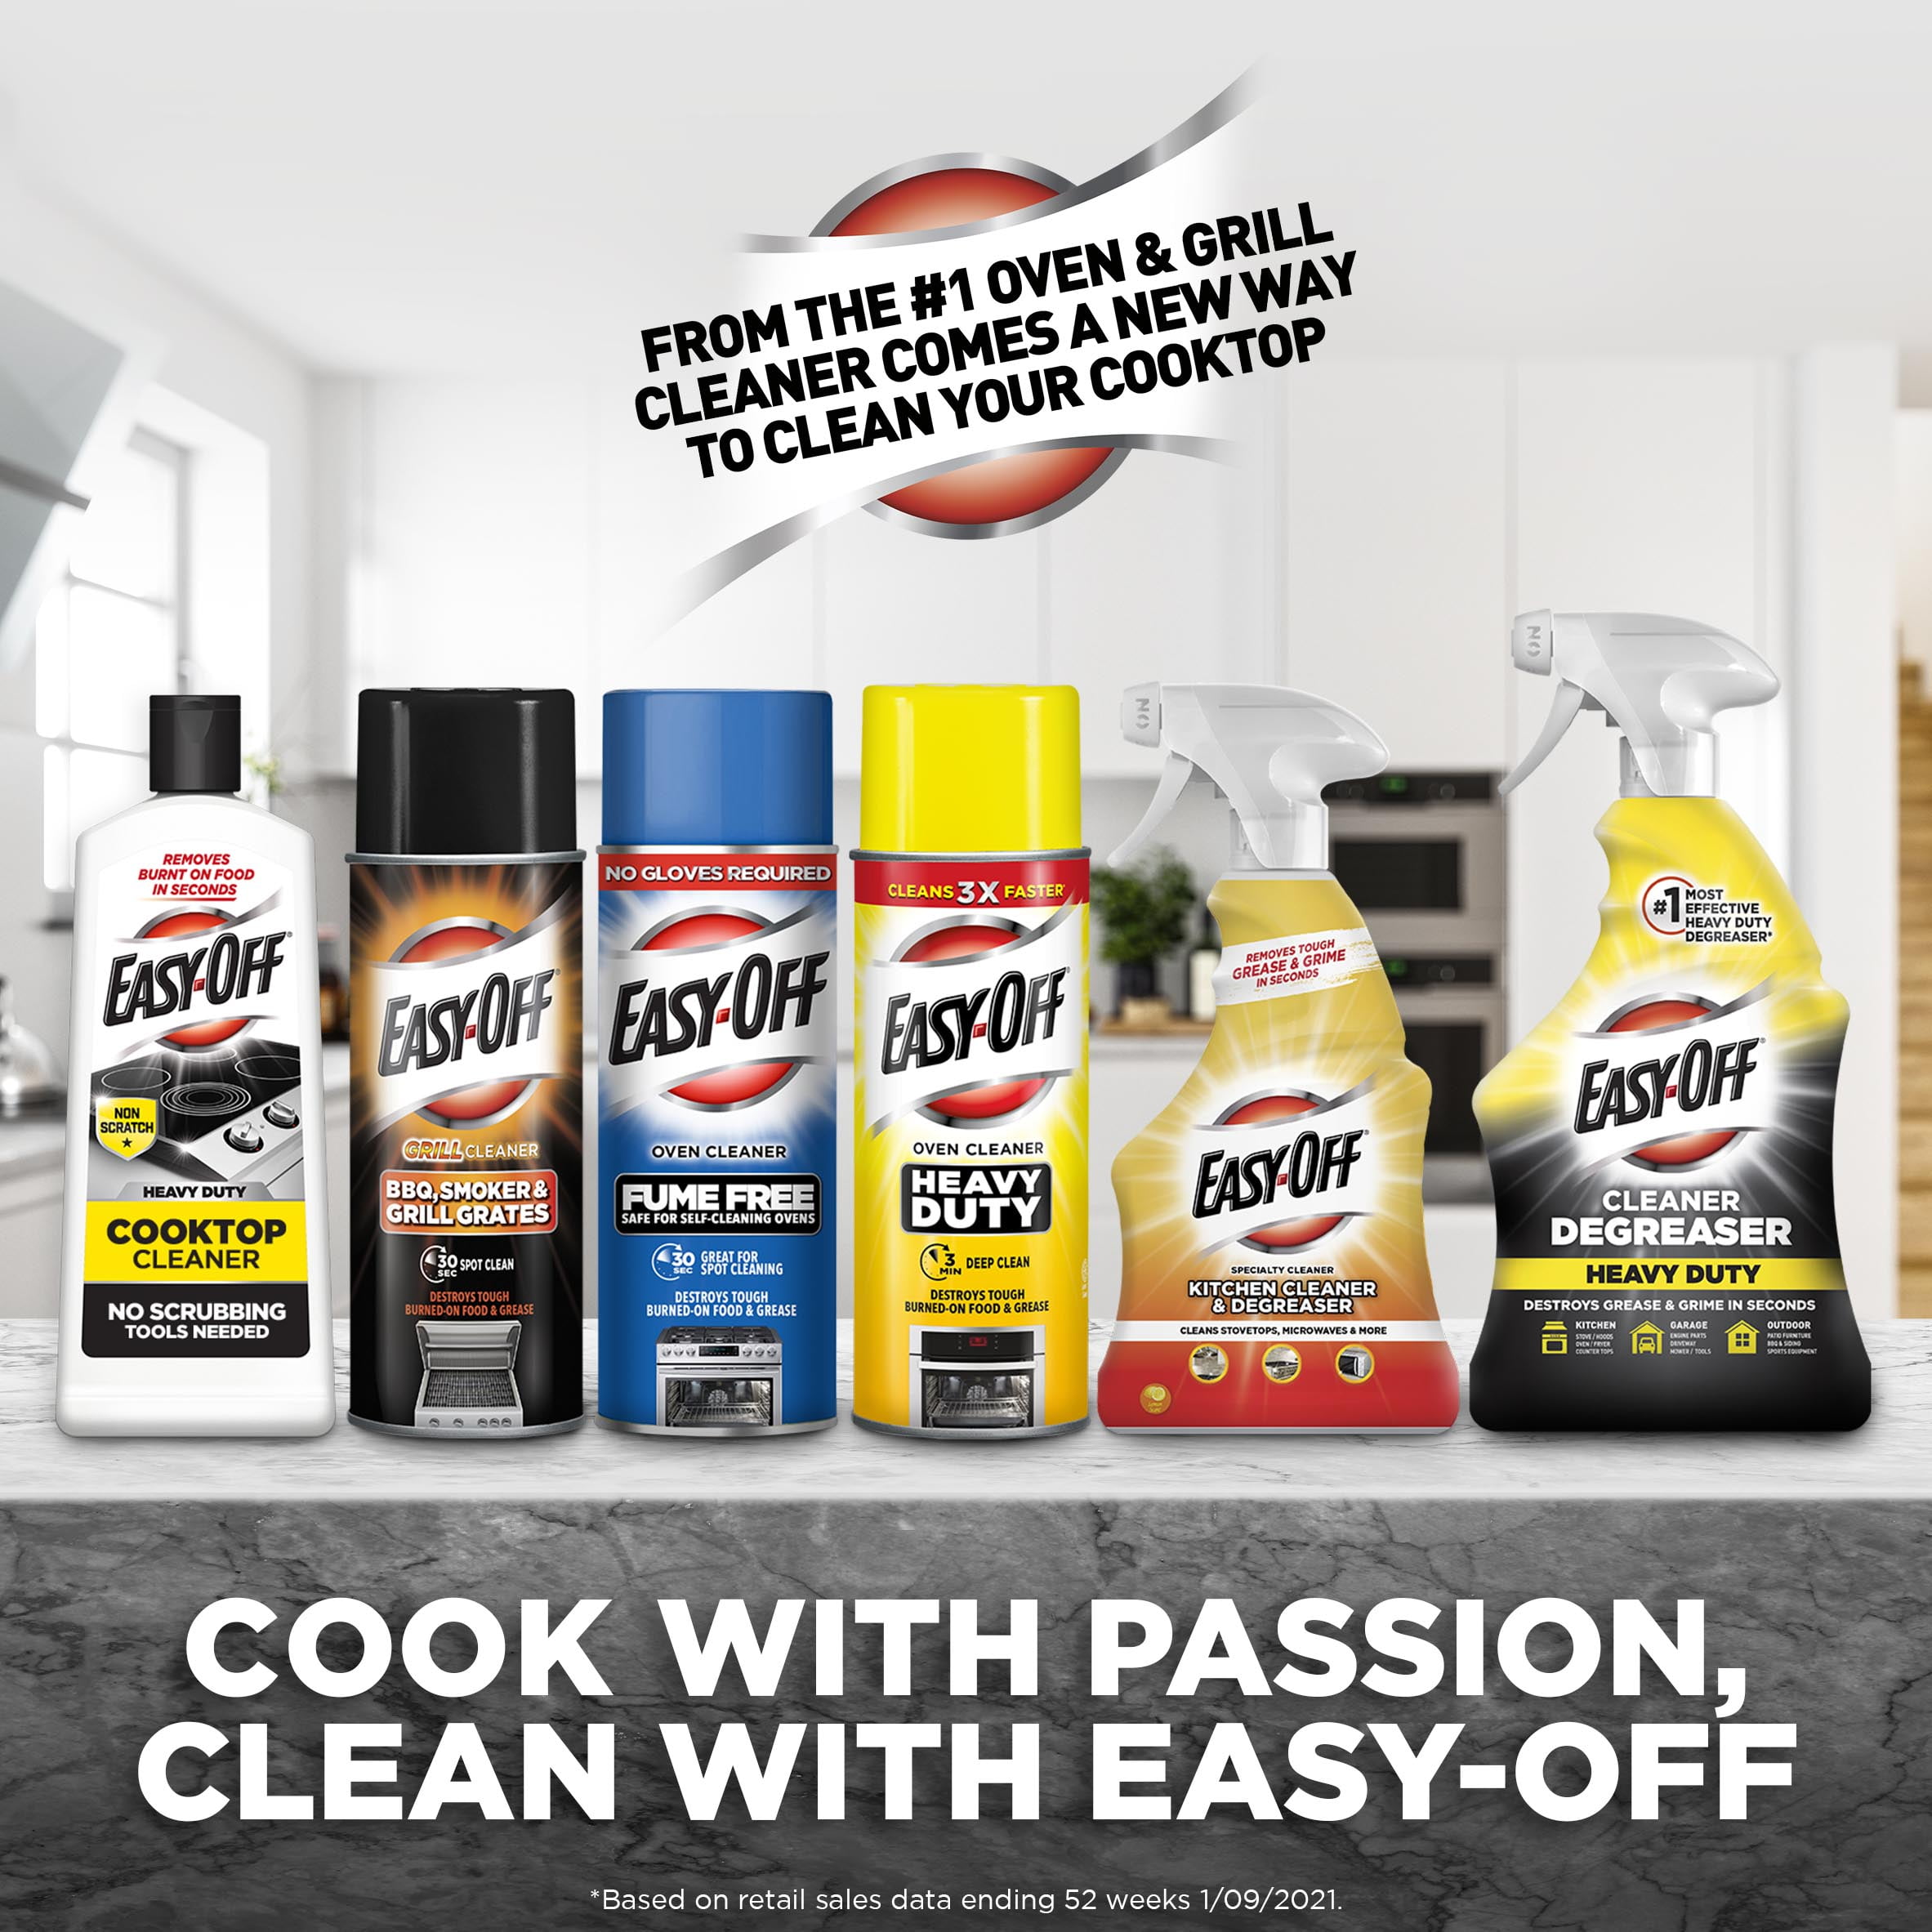 Easy-off Cooktop Cleaner - 16oz : Target